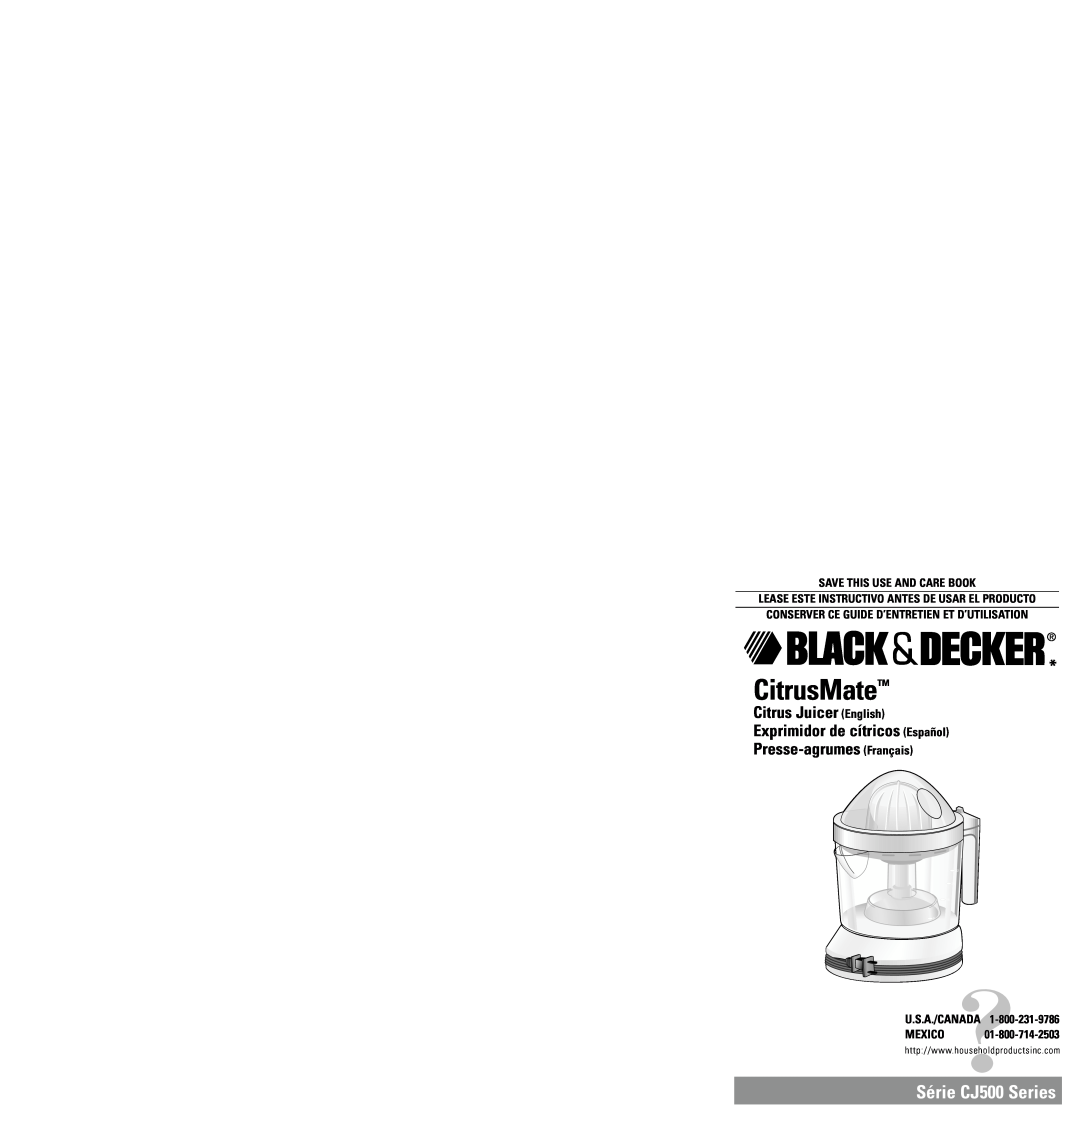 Black & Decker CJ500 warranty CitrusMate, Citrus Juicer English, Exprimidor de cítricos Español, Presse-agrumes Français 